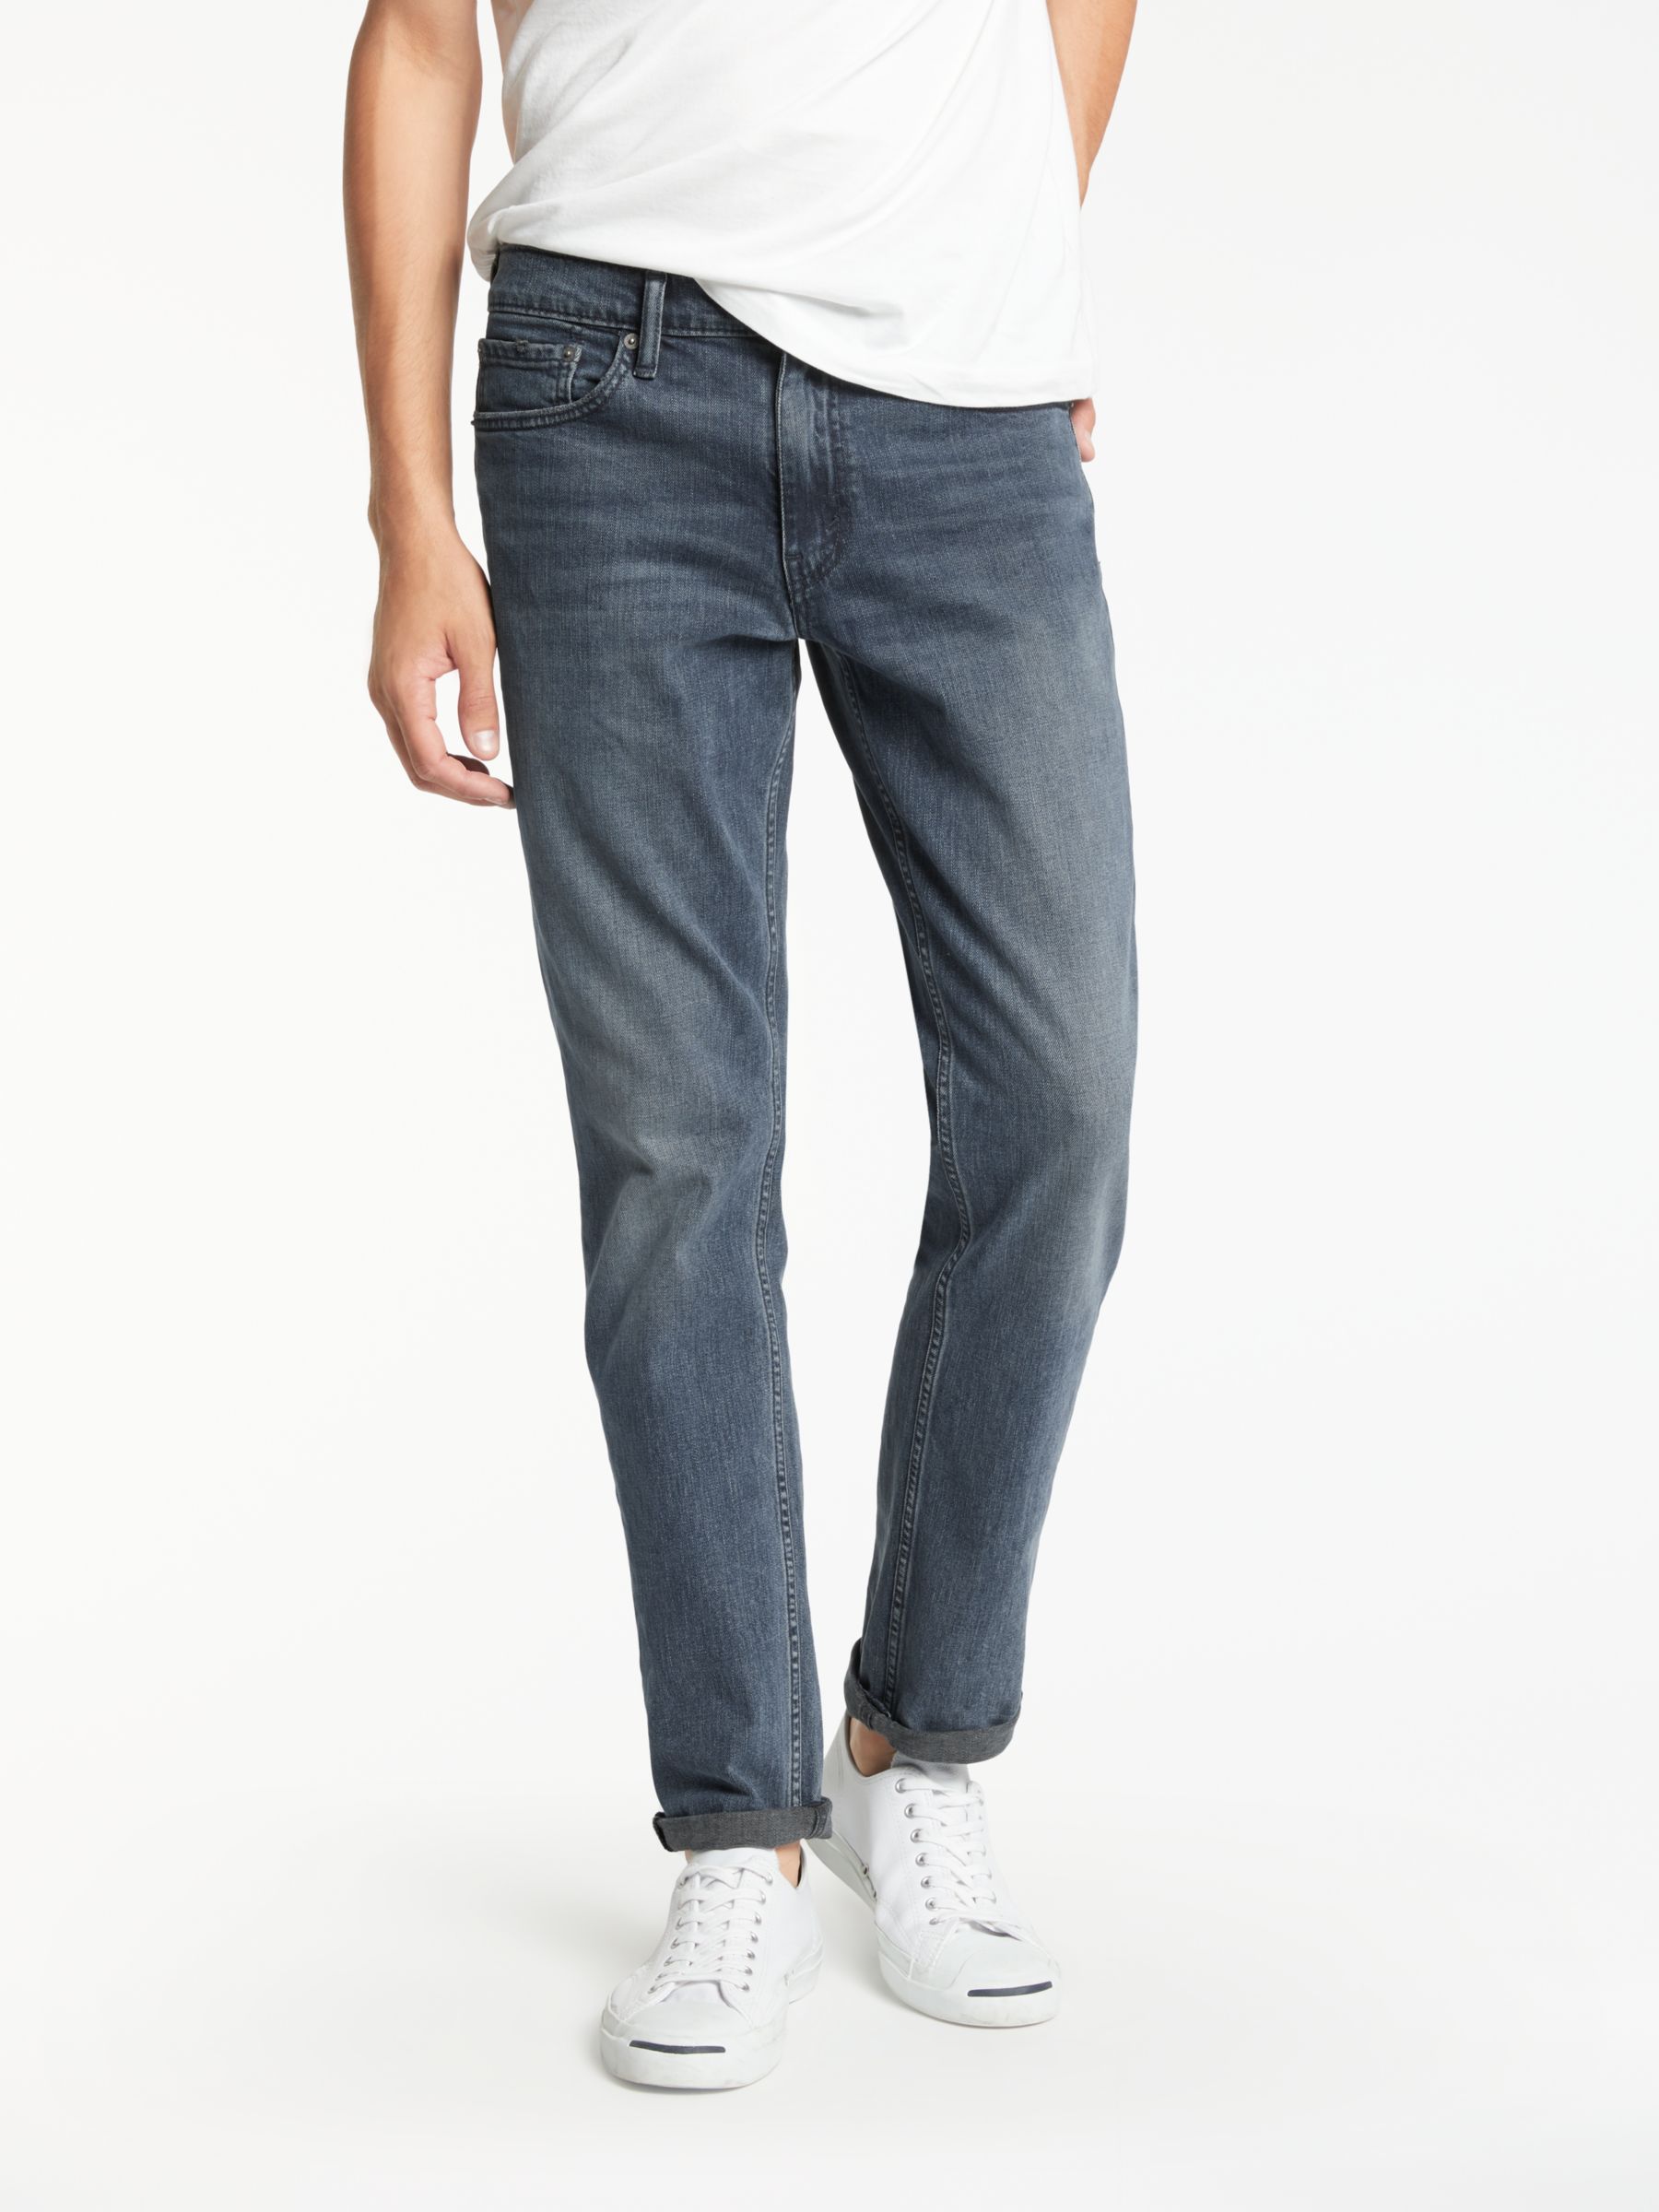 buy levis 511 jeans online